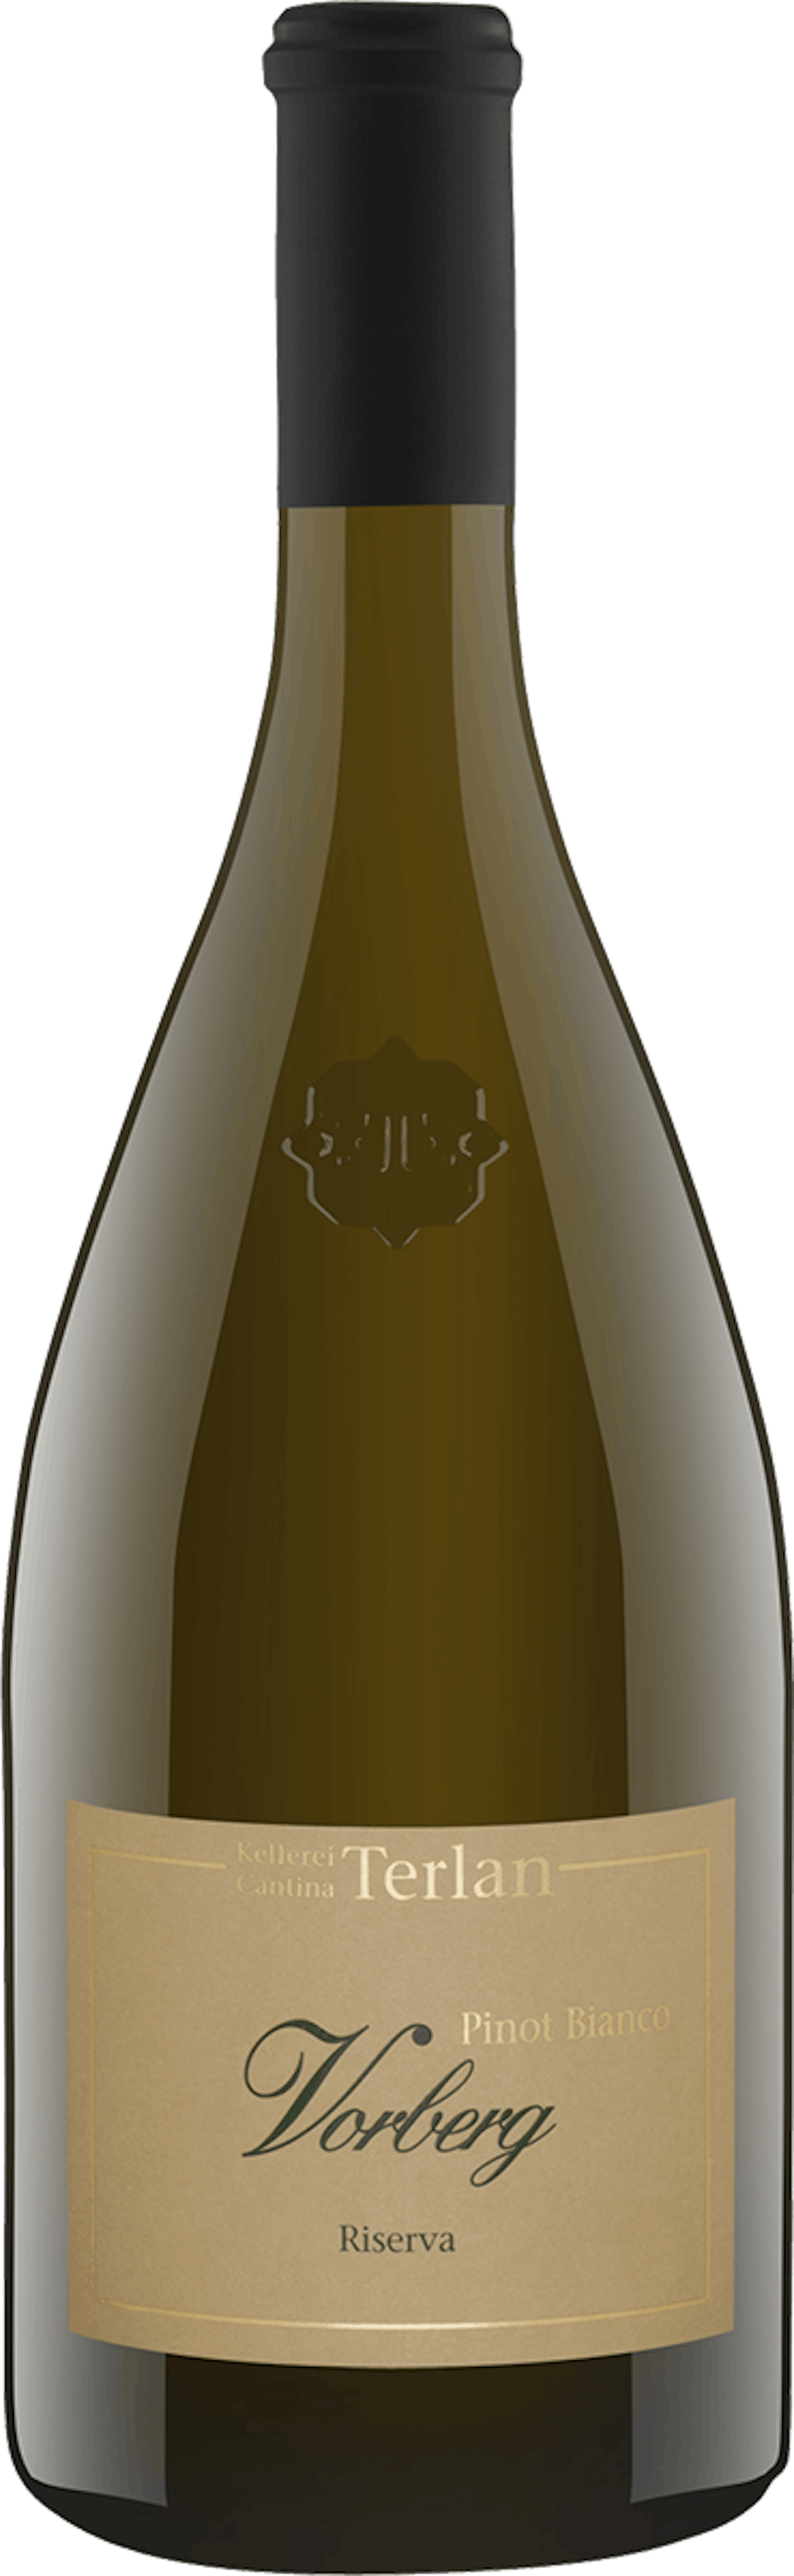 Vorberg Pinot Bianco Riserva